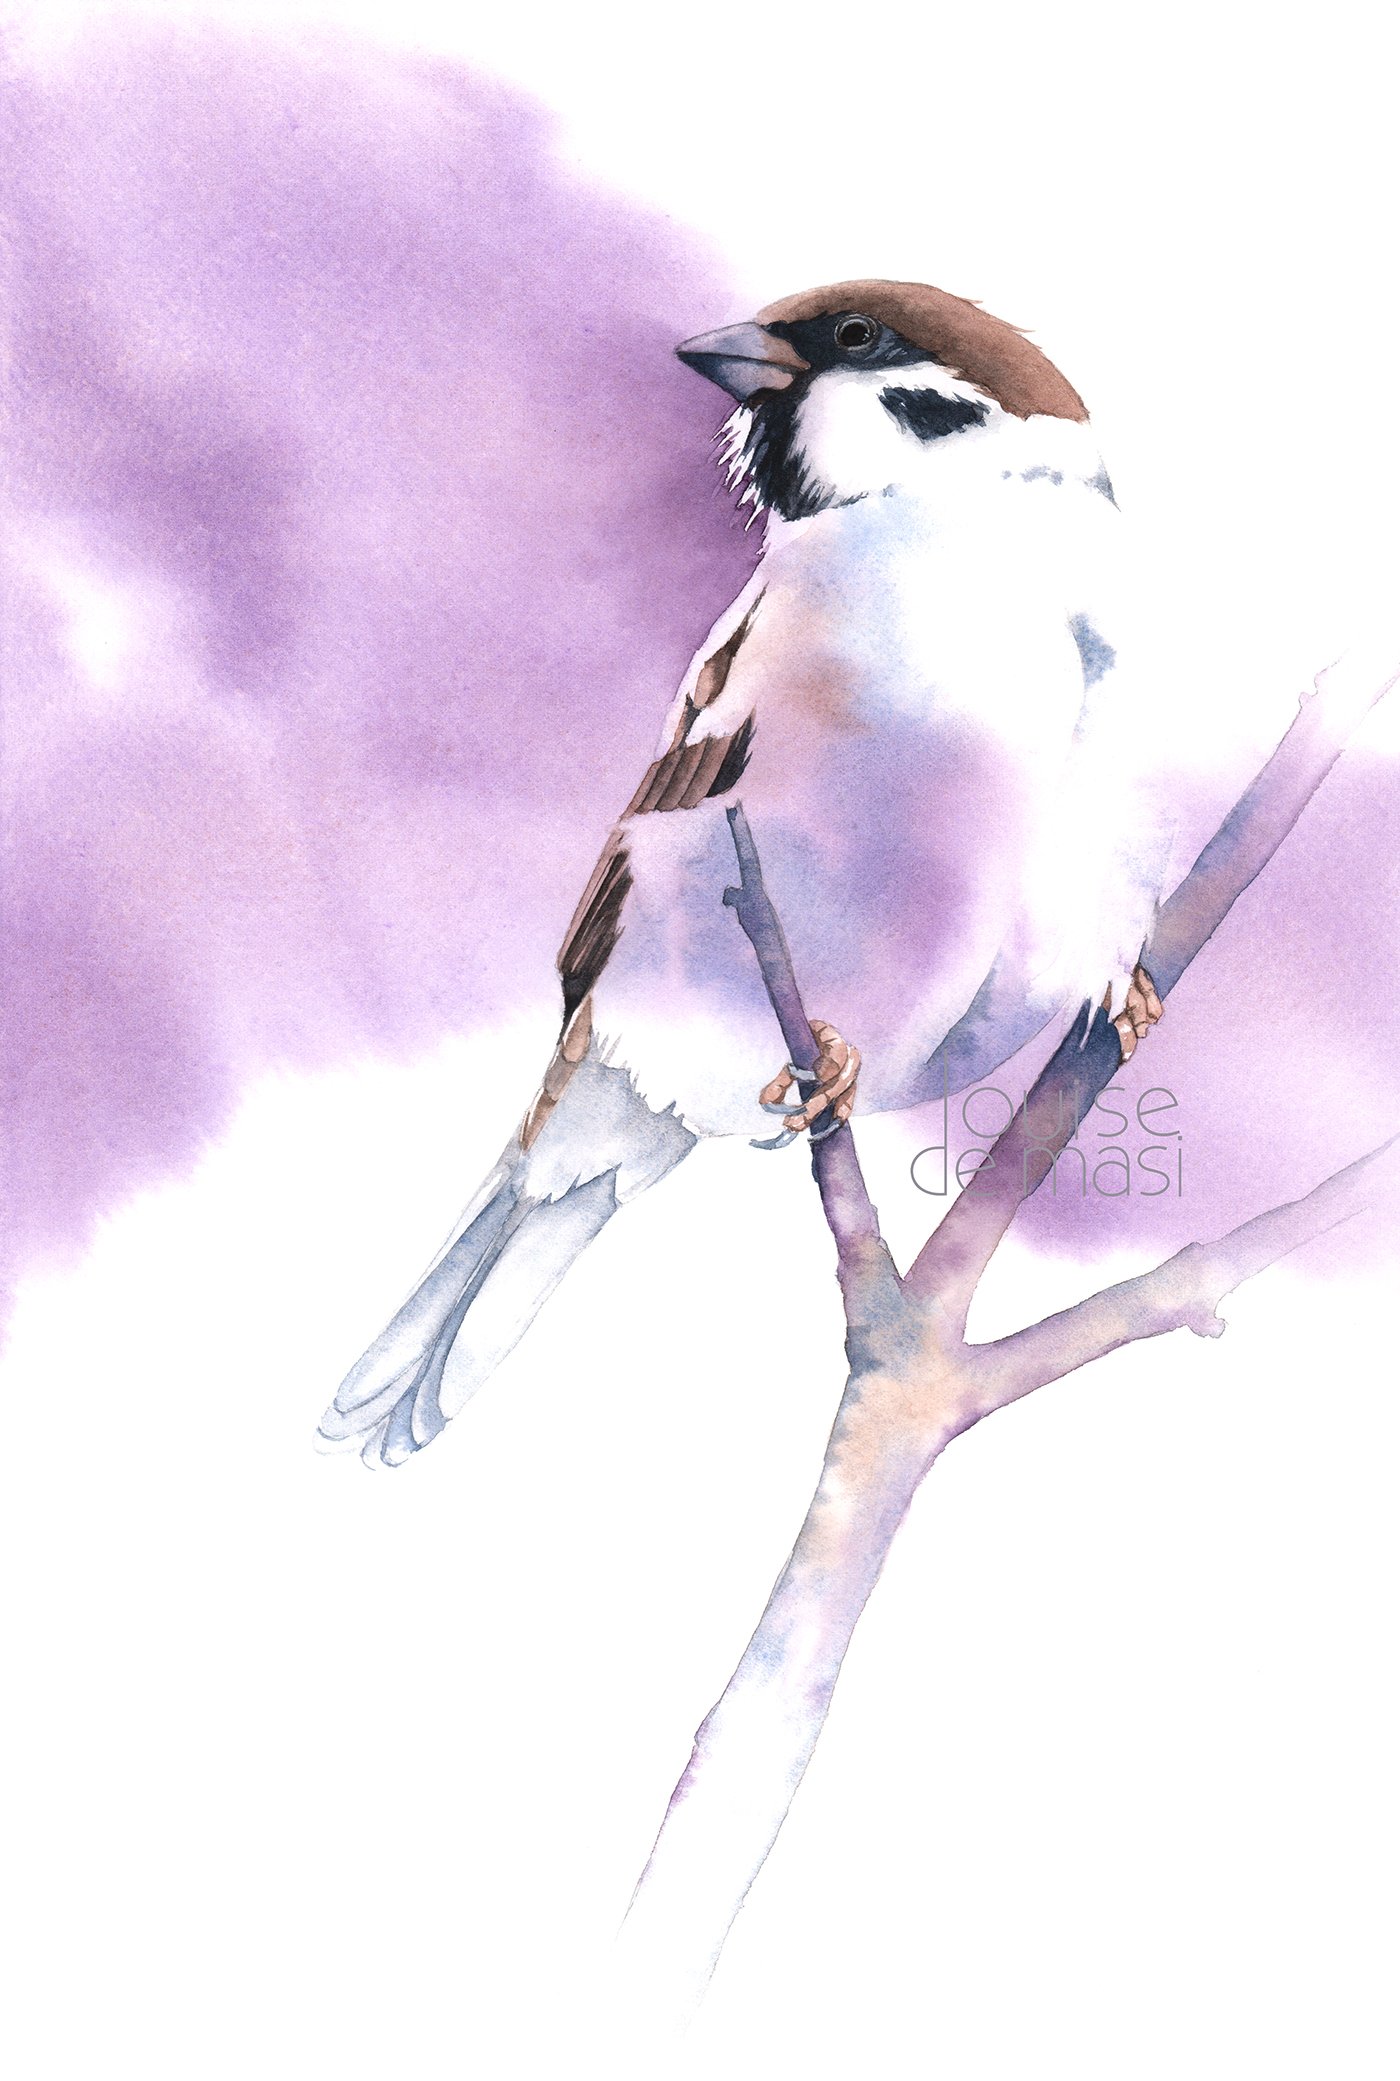 Sparrow - intermediate